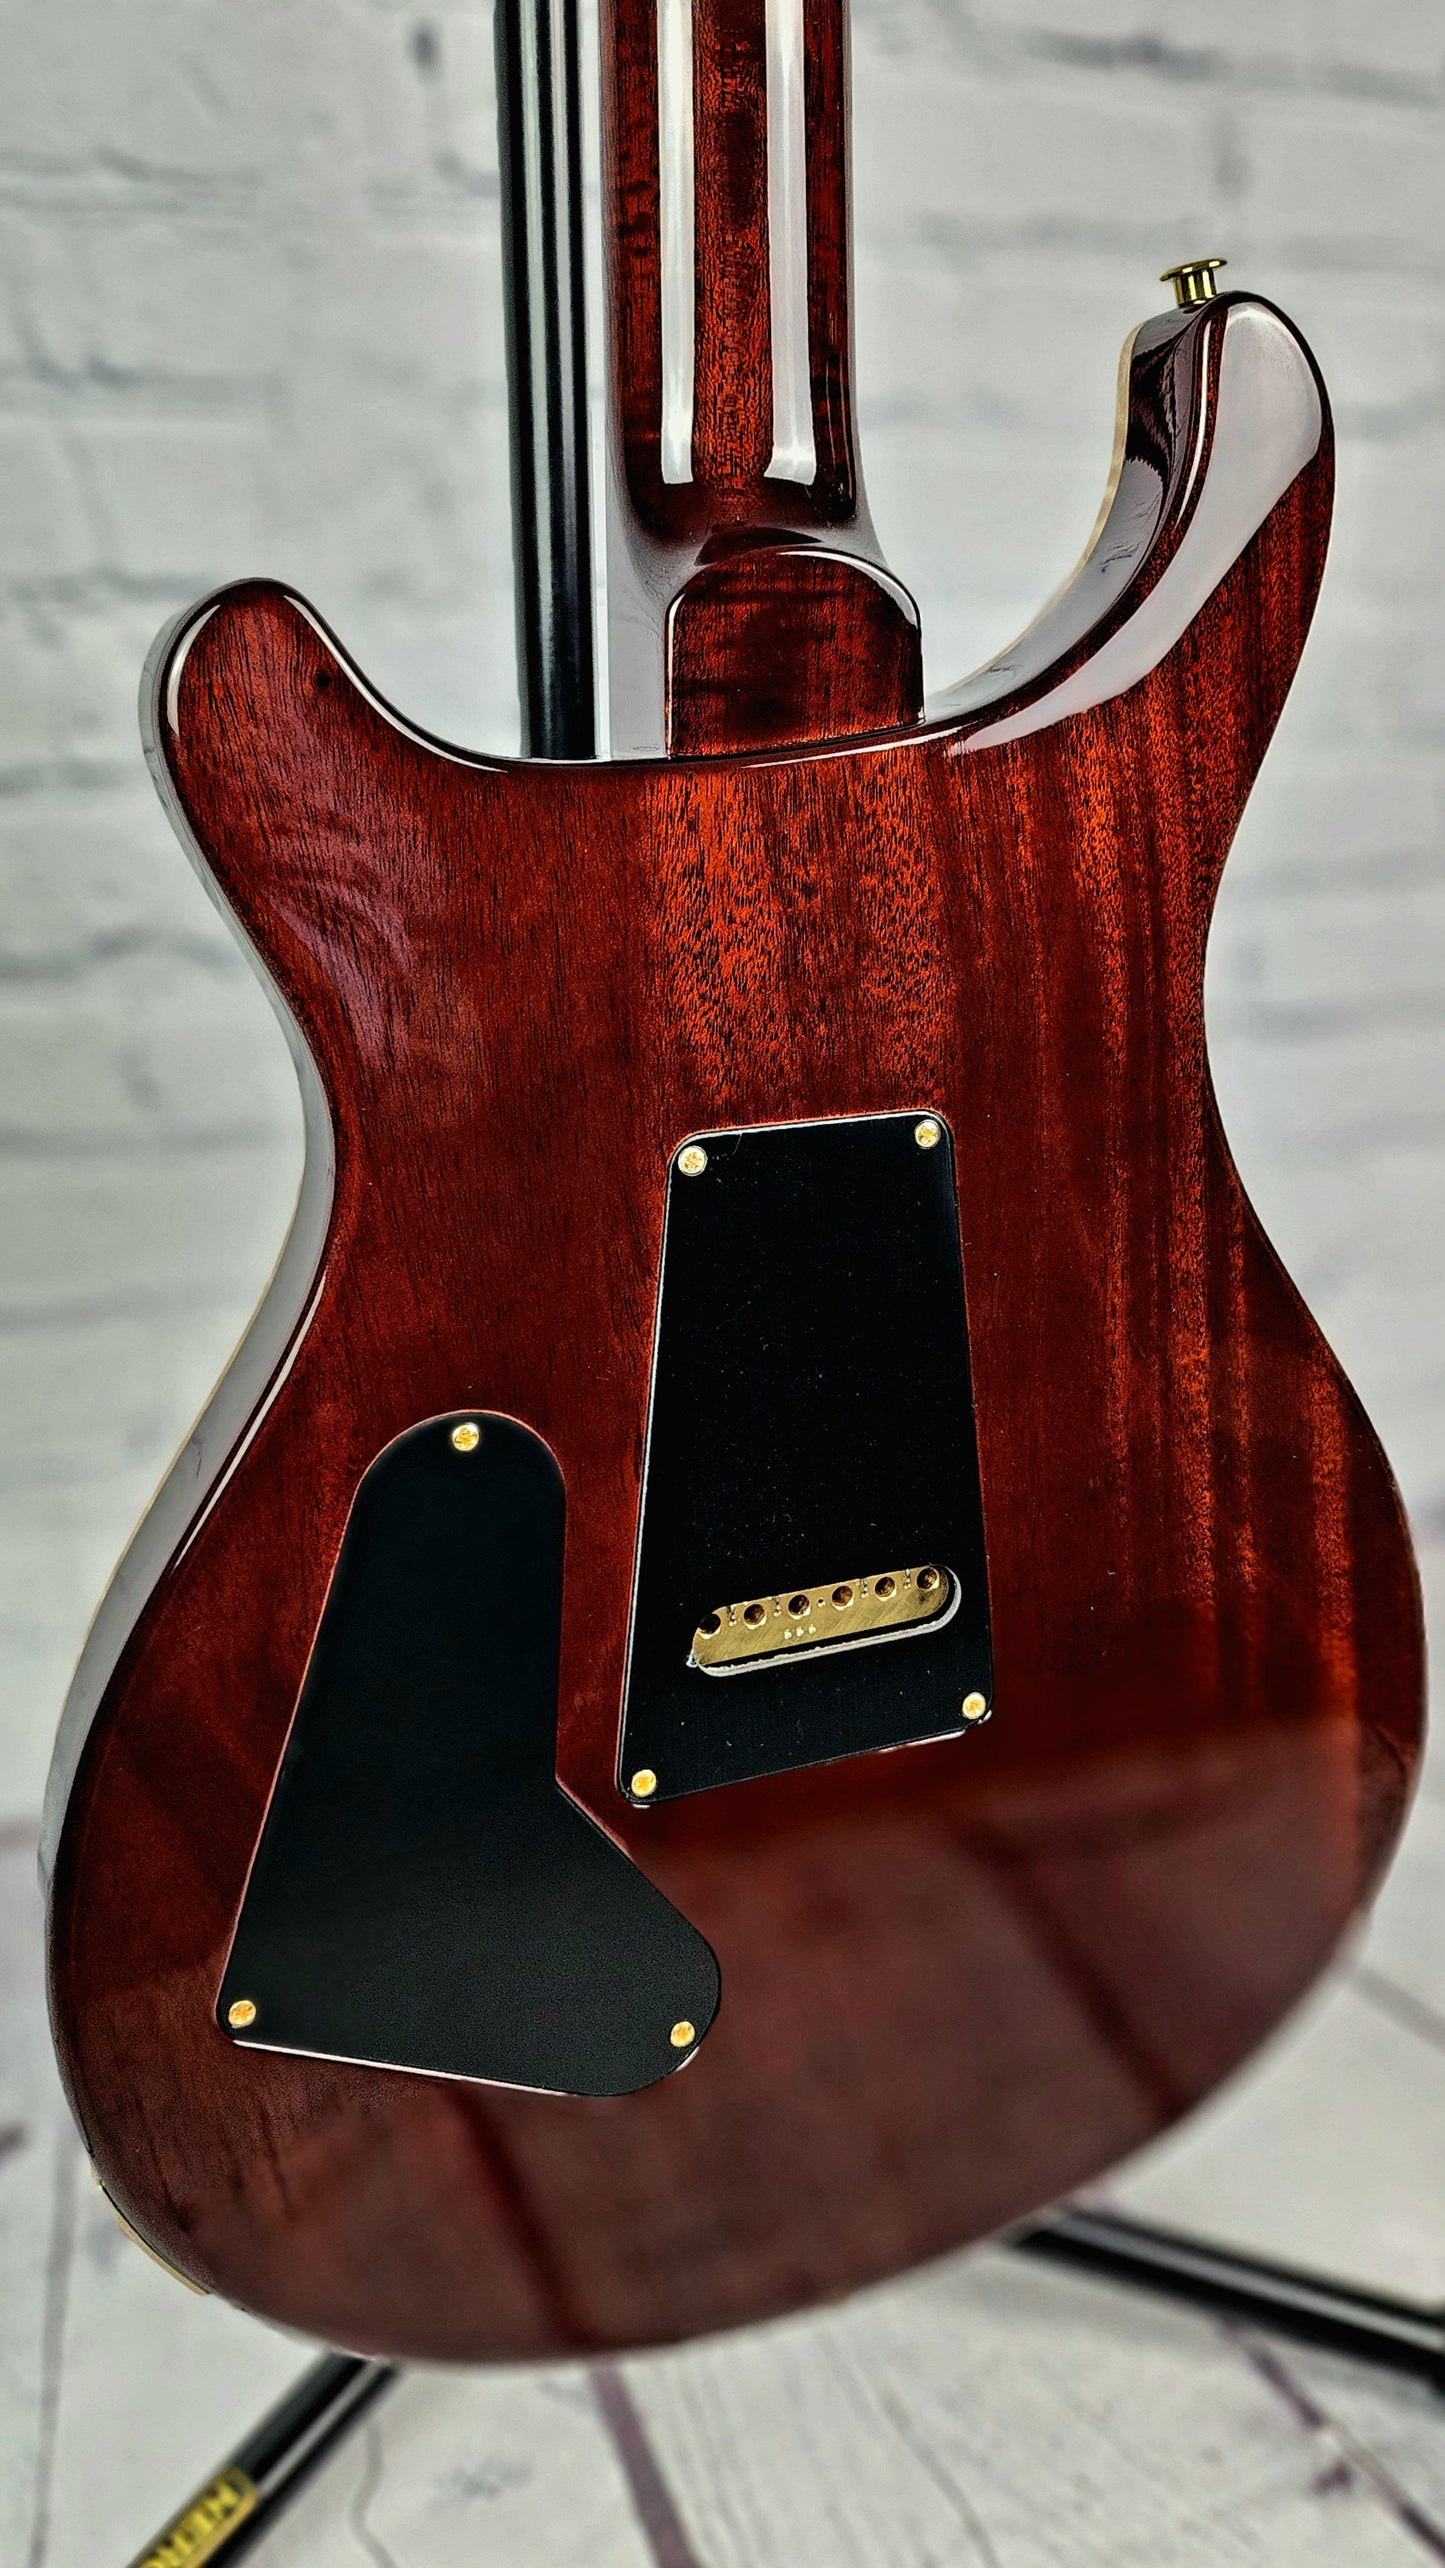 Paul Reed Smith PRS Custom 24 Core 10 Top Electric Guitar Orange Tiger